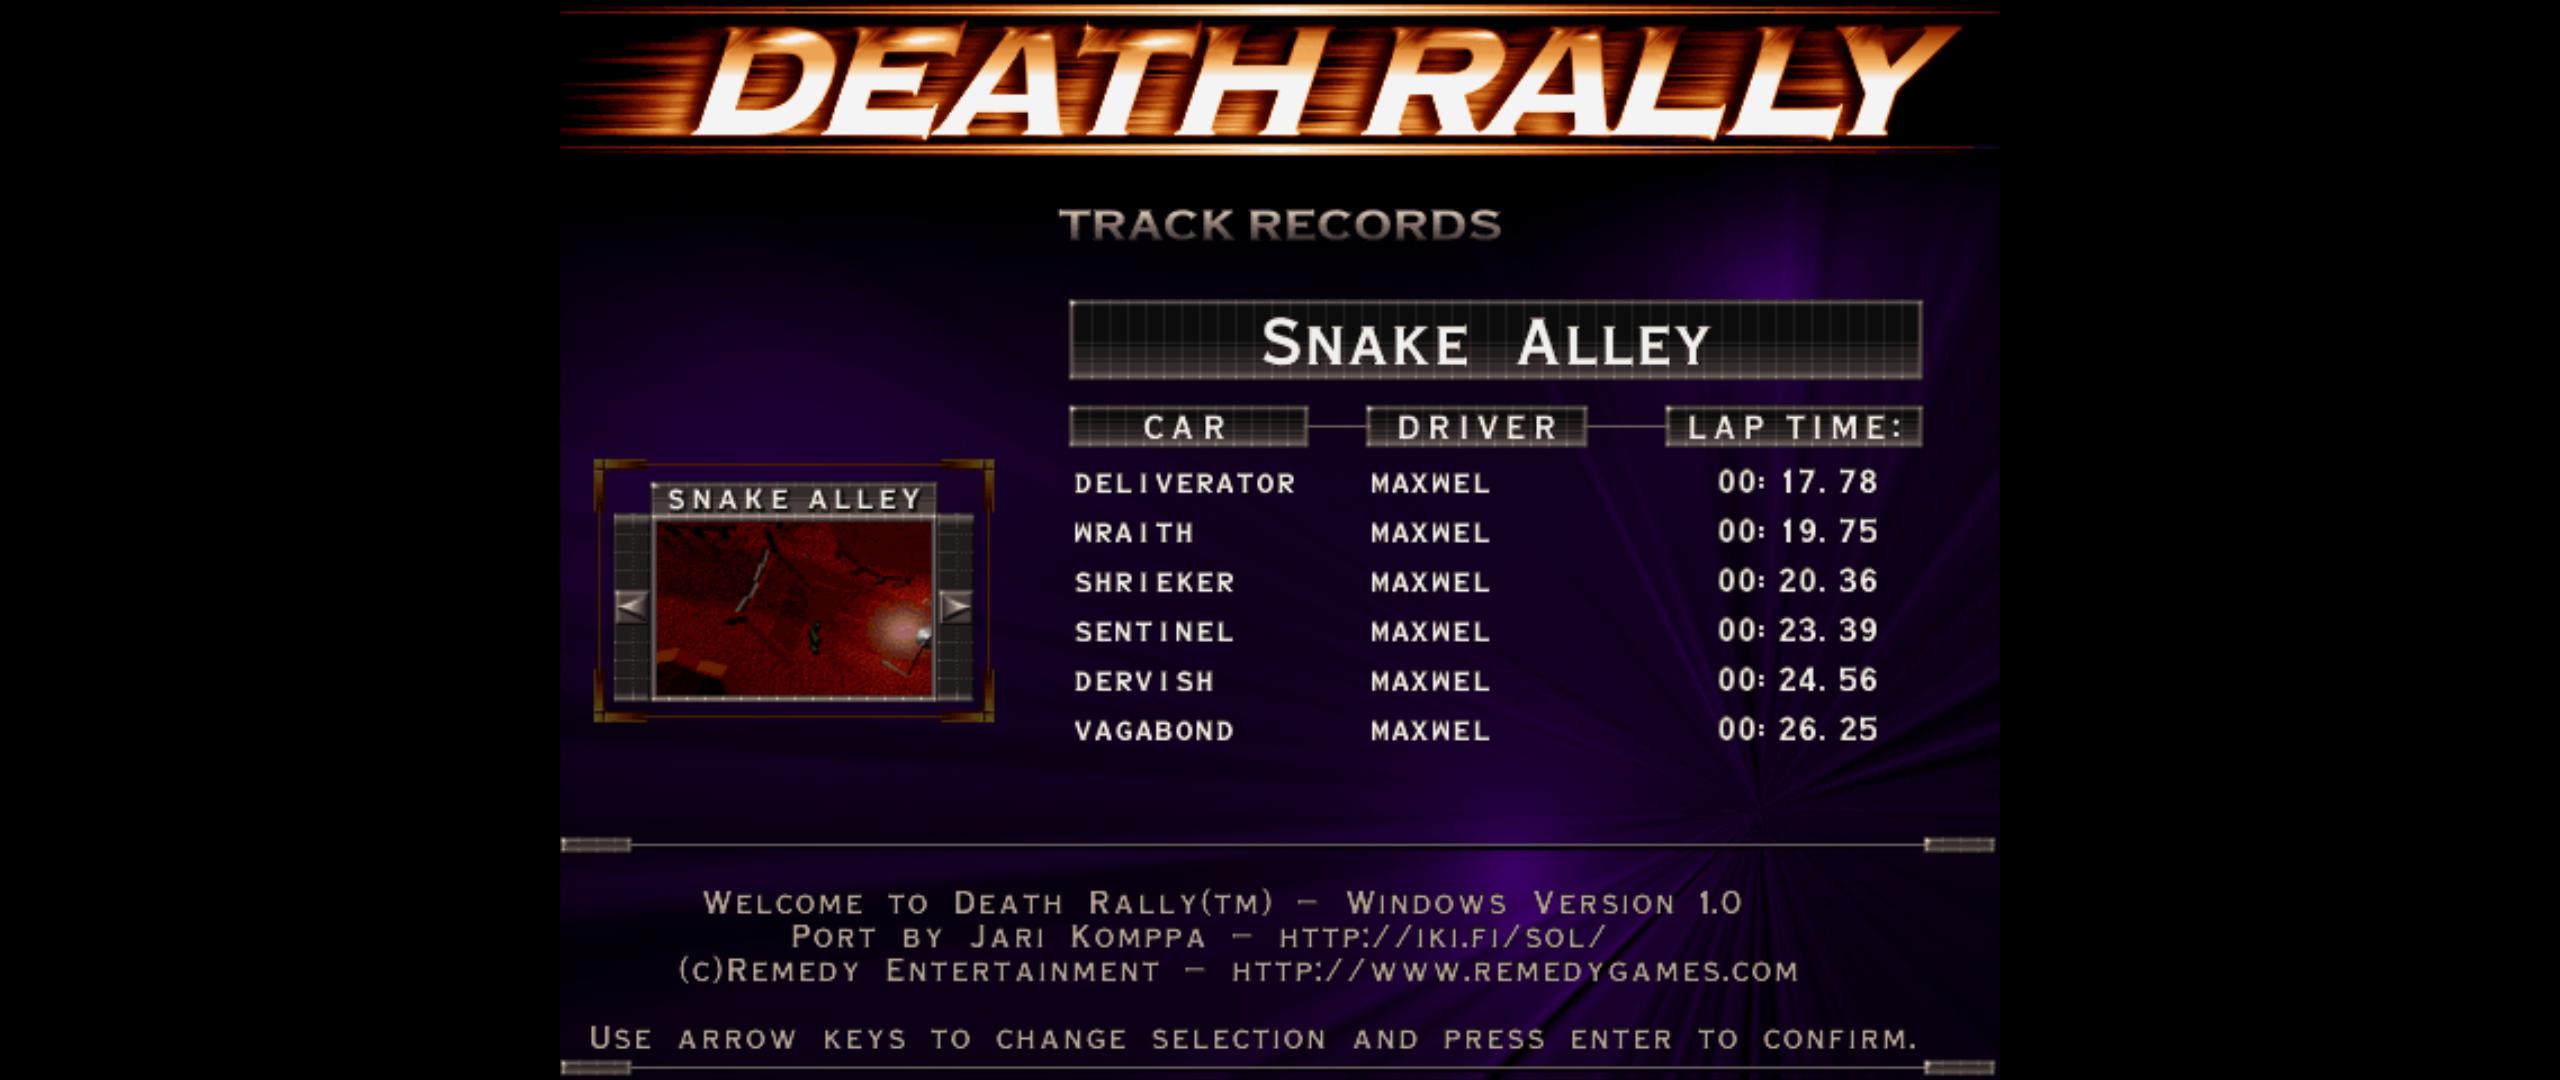 Maxwel: Death Rally [Snake Alley, Vagabond Car] (PC) 0:00:26.25 points on 2016-03-03 02:00:26